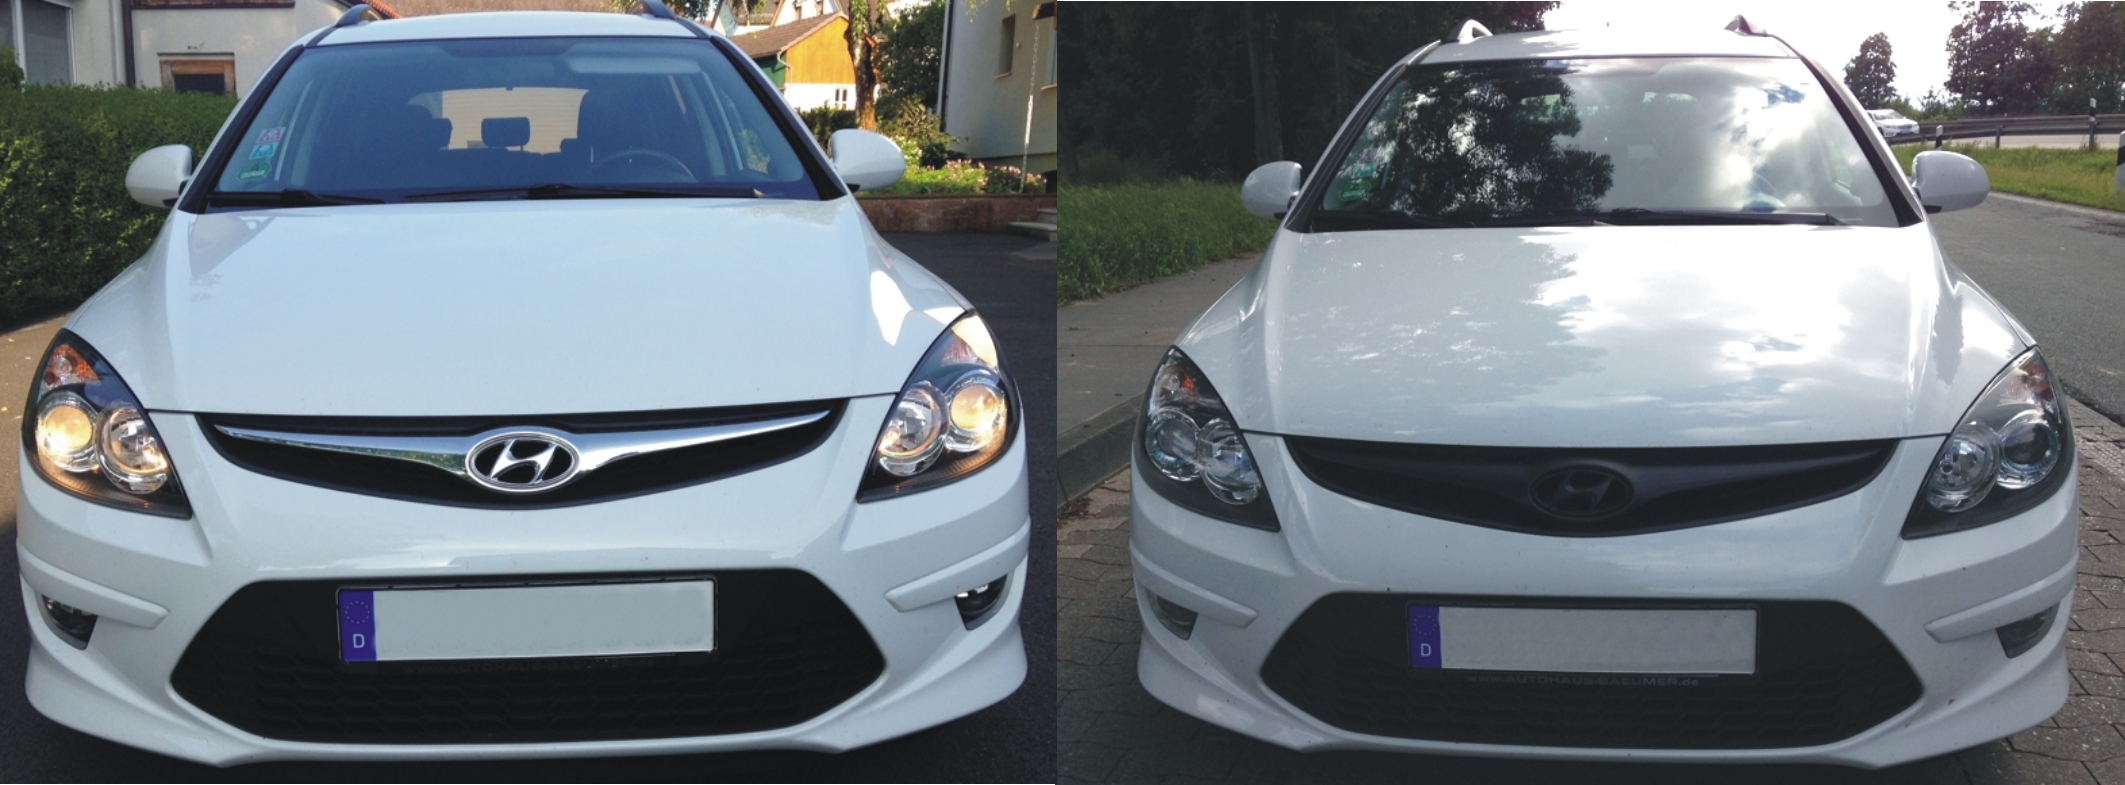 Vergleichsbilder: chrom vs schwarzmattes Hyundai-Emblem